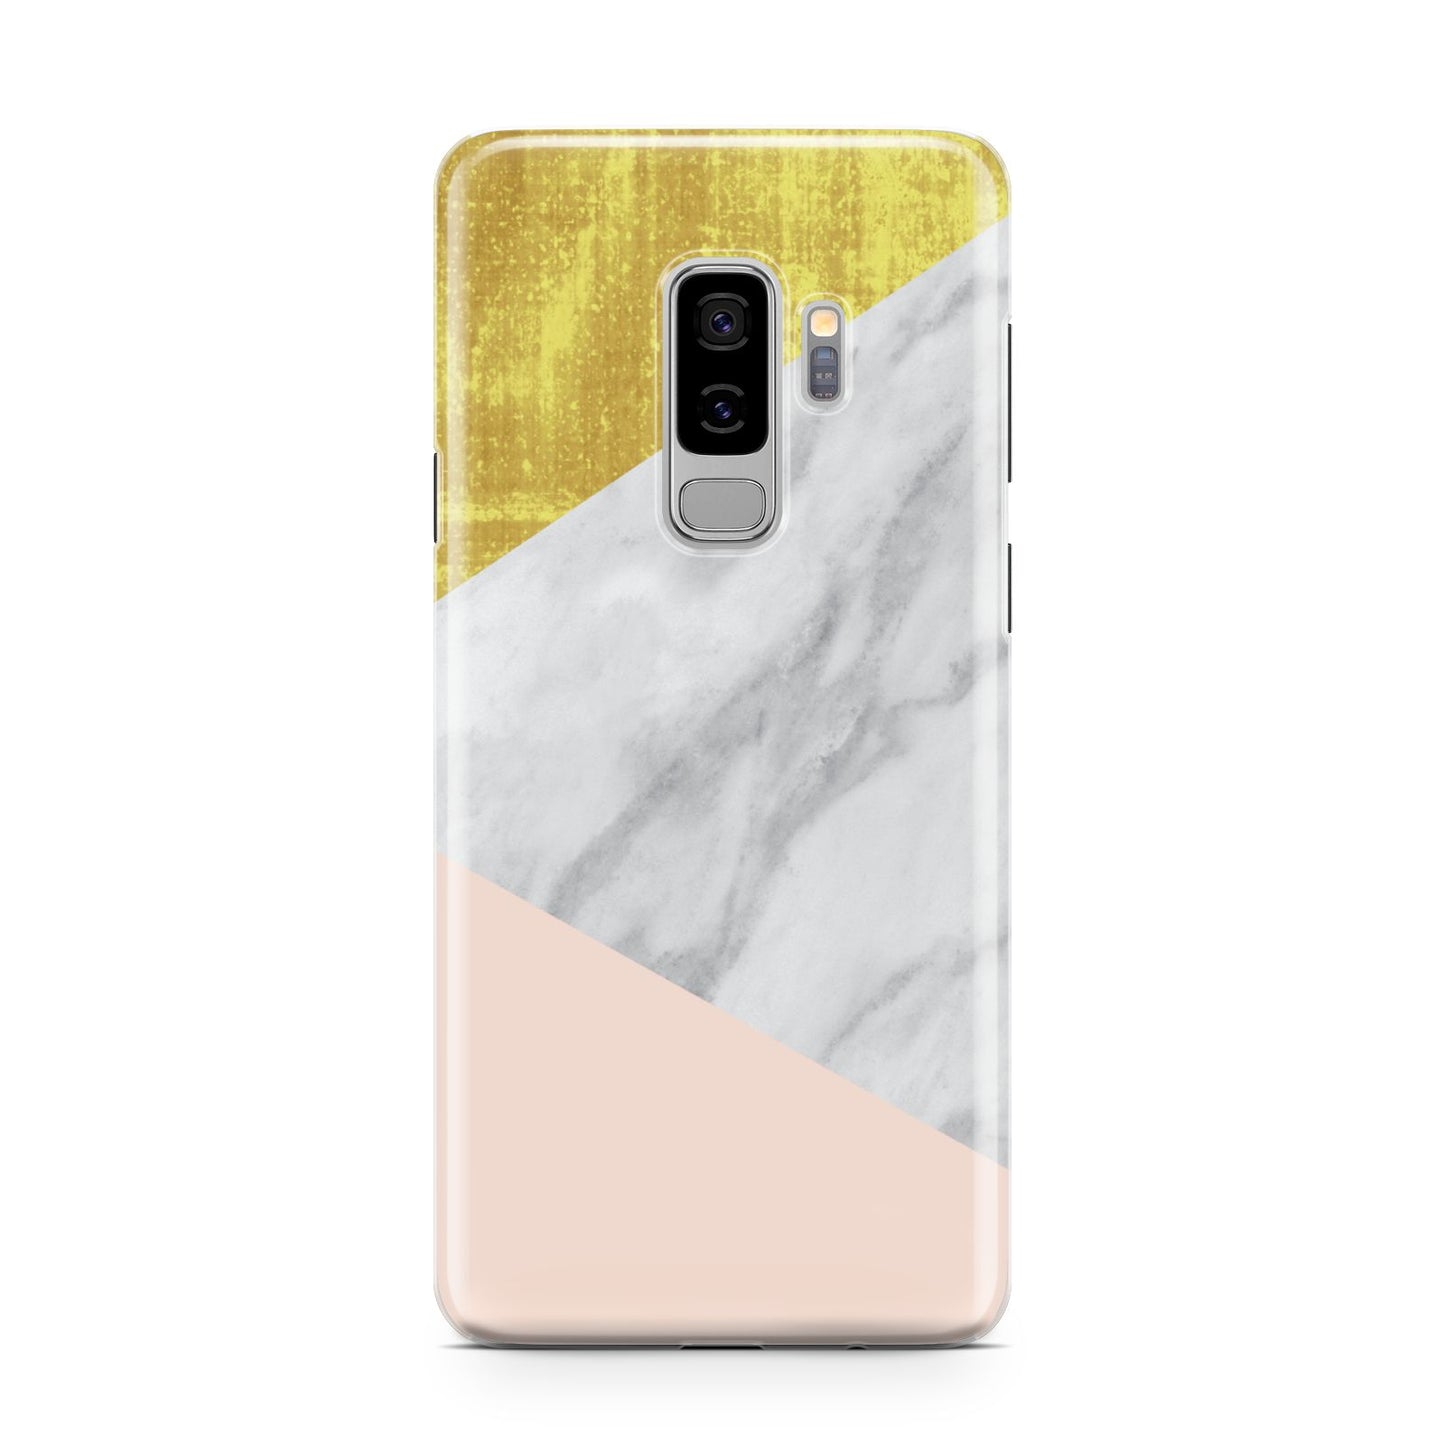 Marble White Gold Foil Peach Samsung Galaxy S9 Plus Case on Silver phone